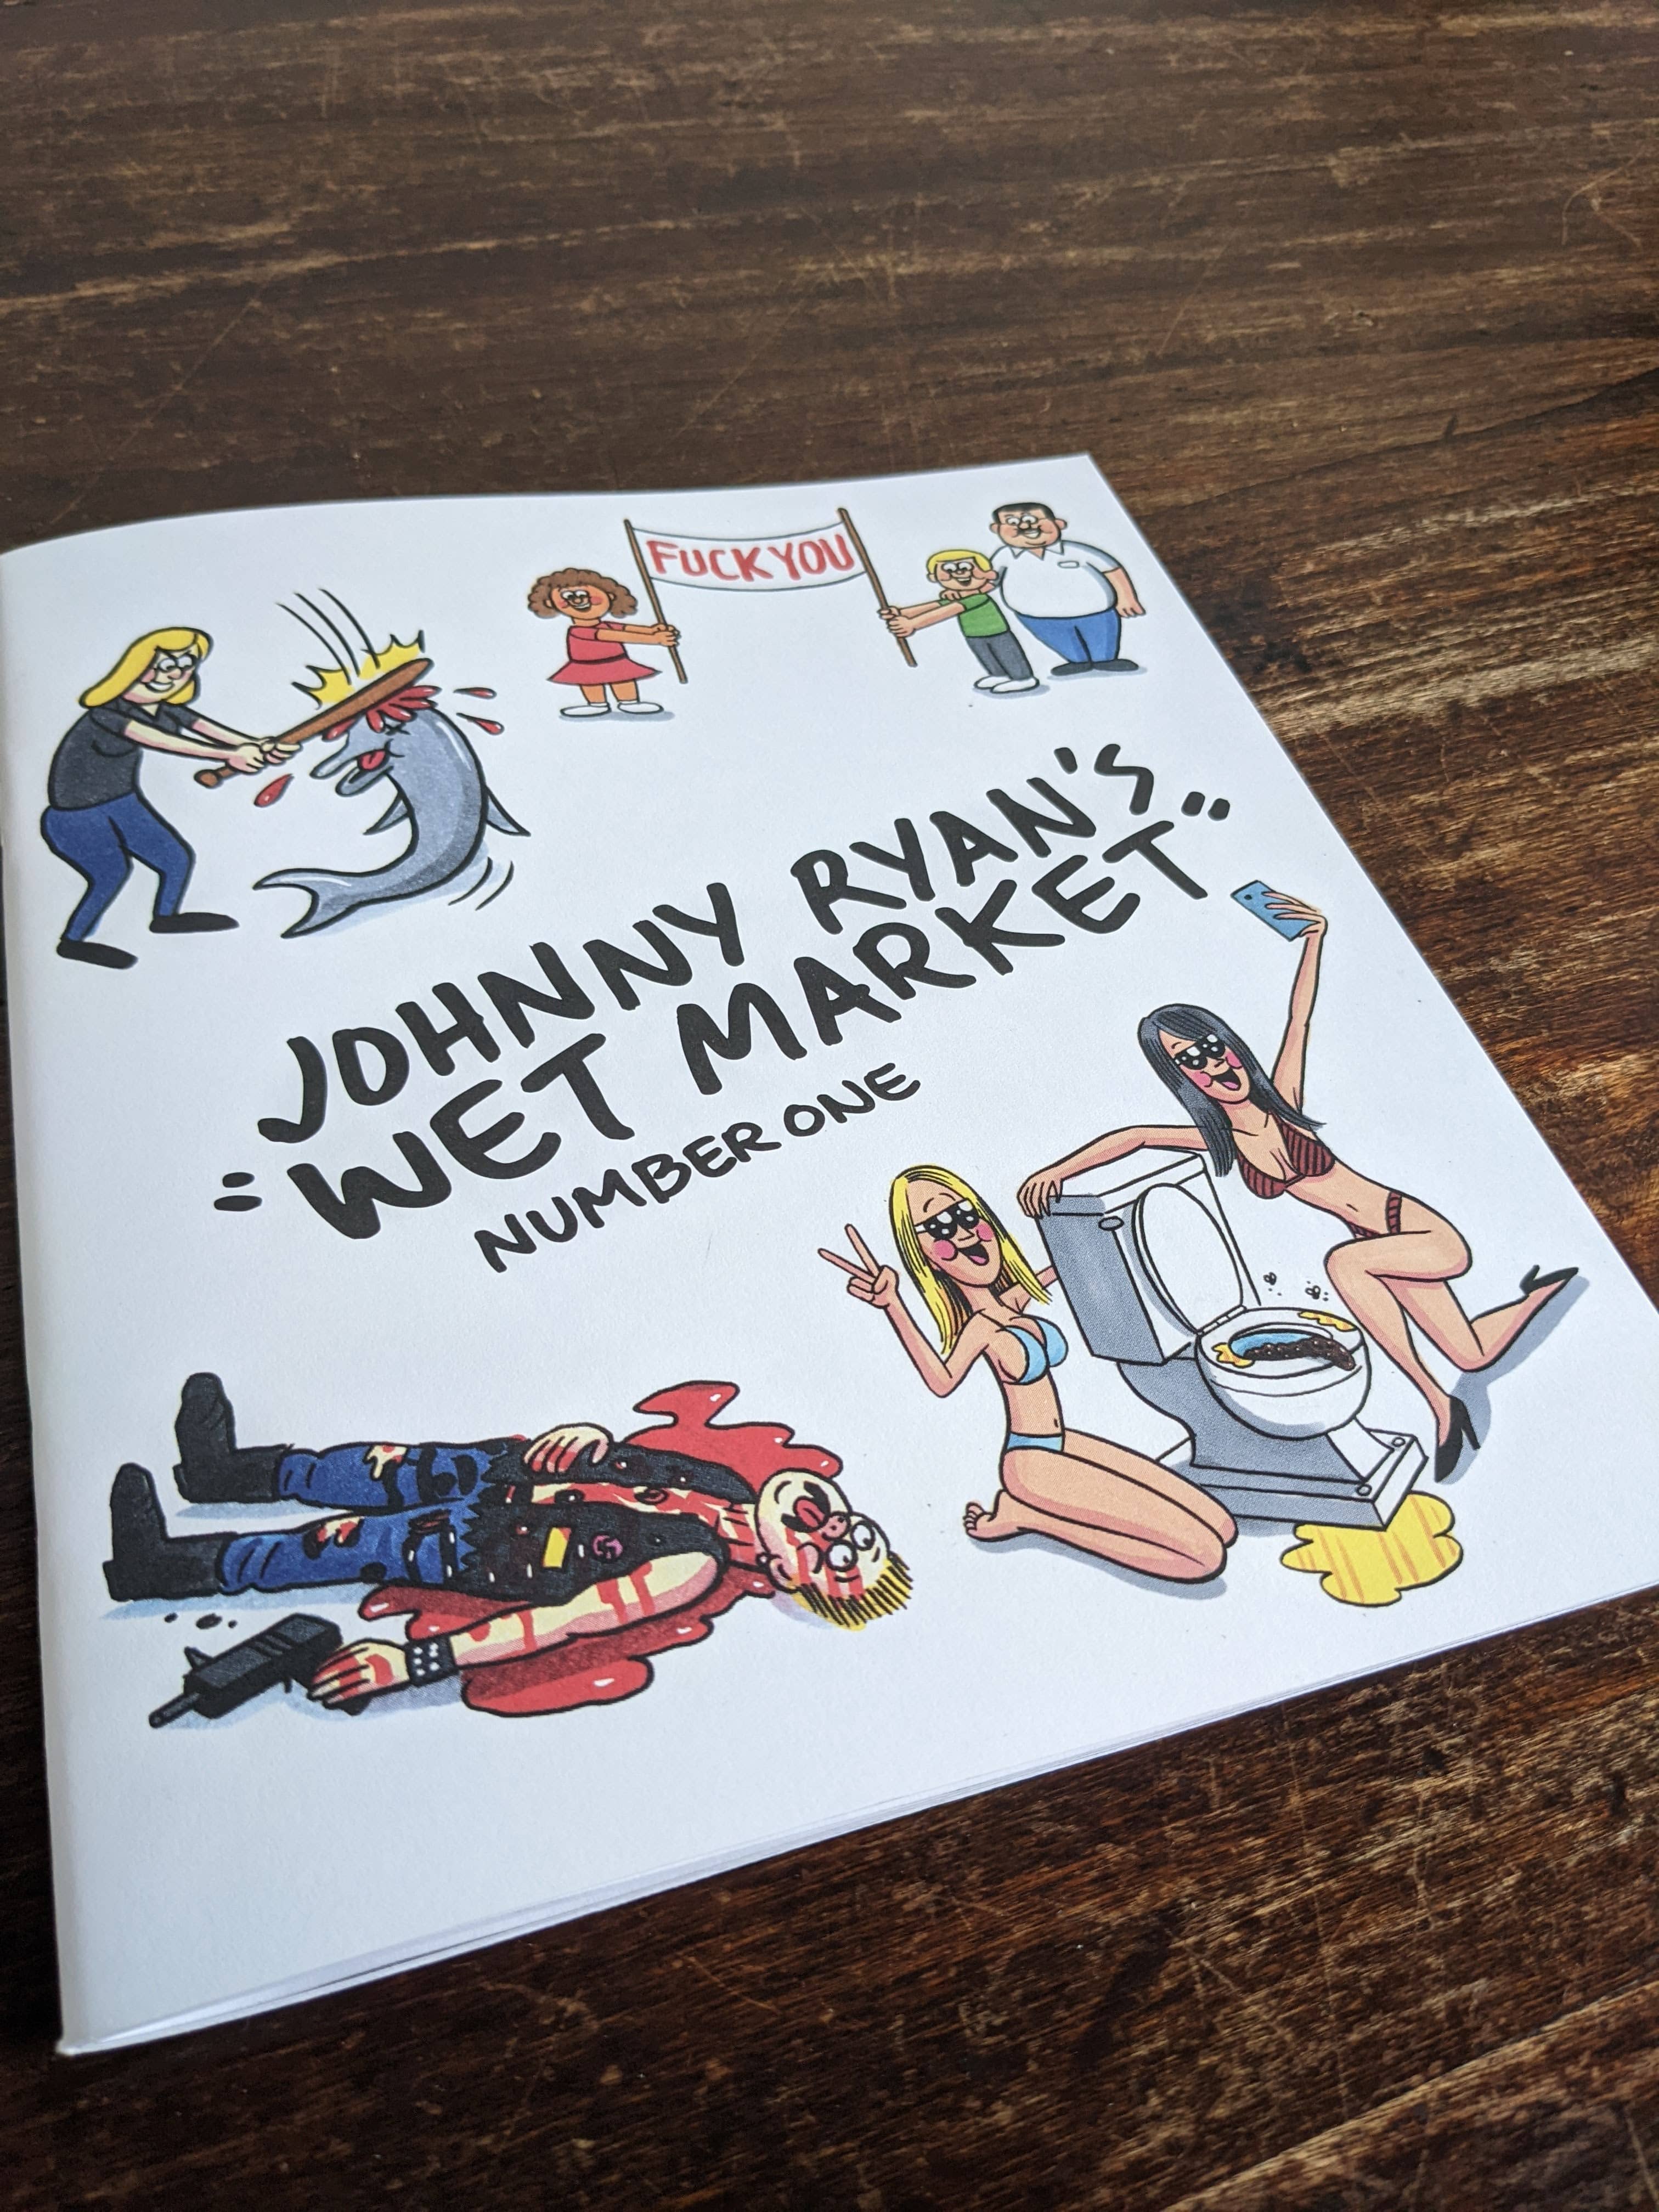 Johnny Ryan's wet market - number one